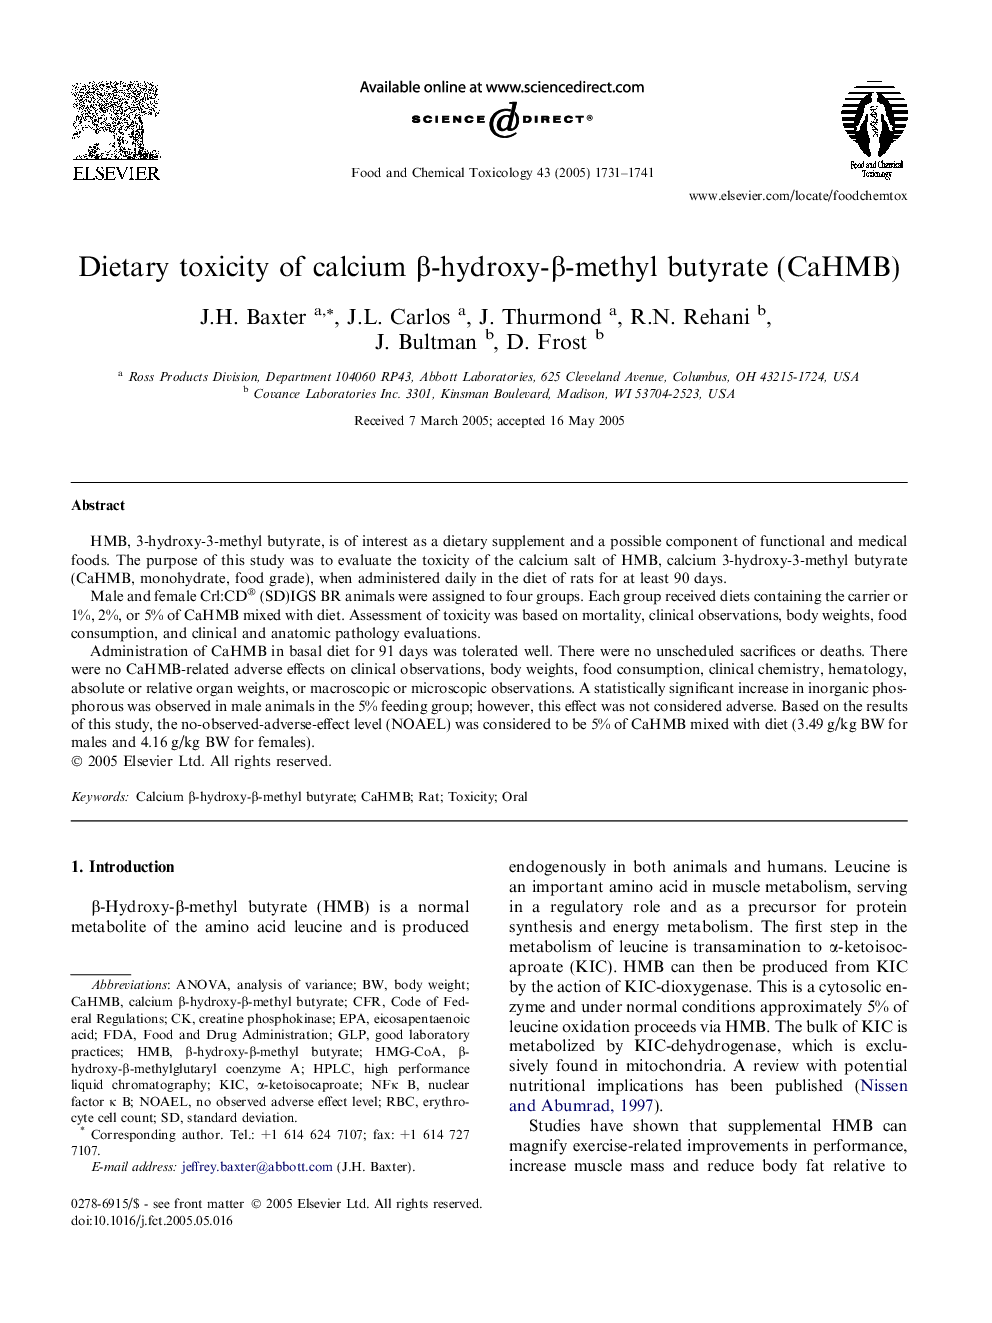 Dietary toxicity of calcium Î²-hydroxy-Î²-methyl butyrate (CaHMB)